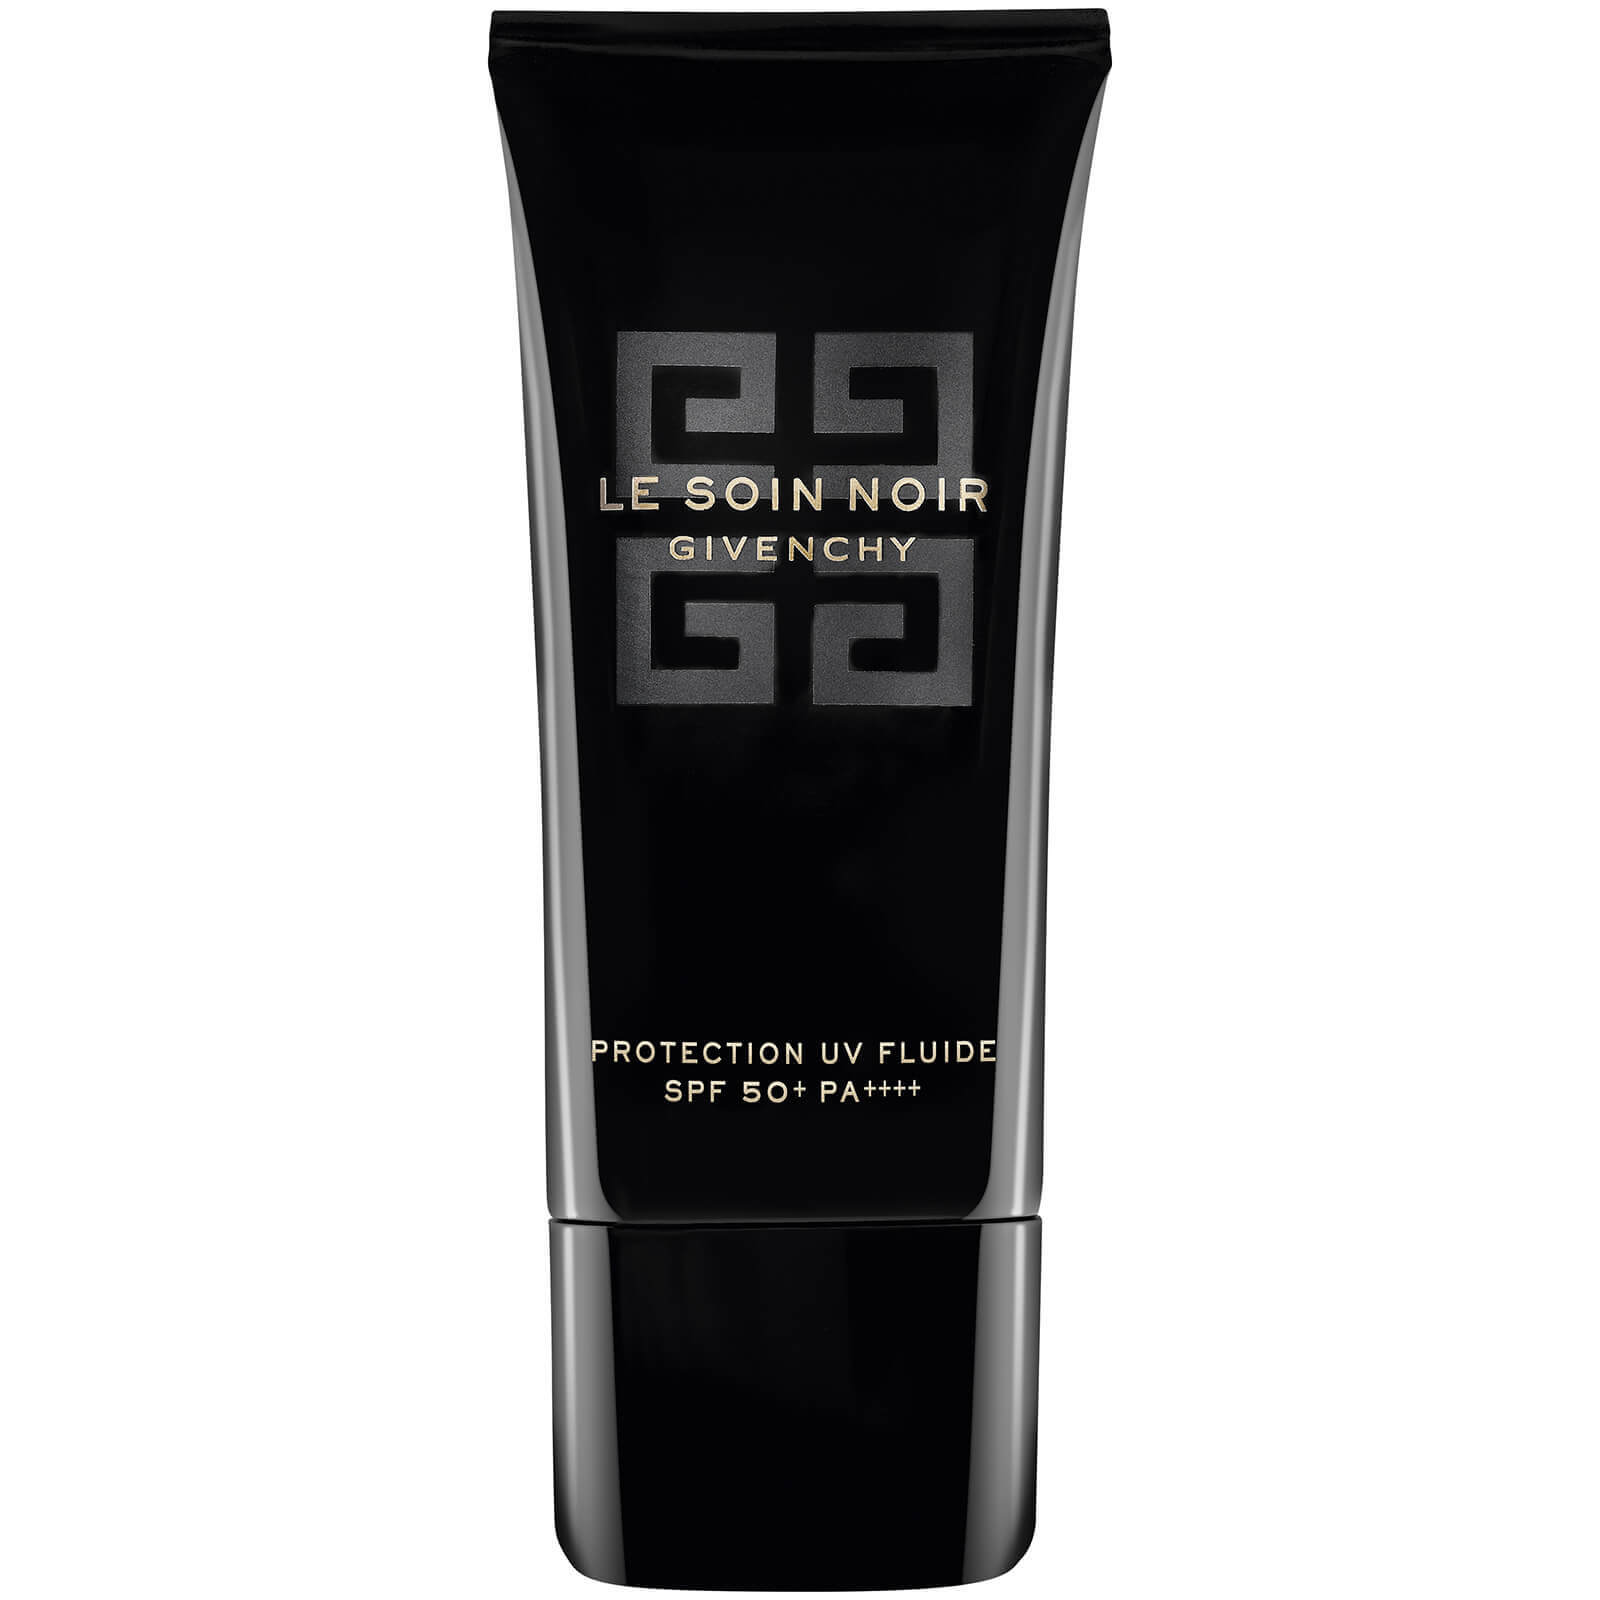 Photos - Sun Skin Care Givenchy Le Soin Noir Protection UV Fluide Protection SPF 50+ Pa++++ Day C 